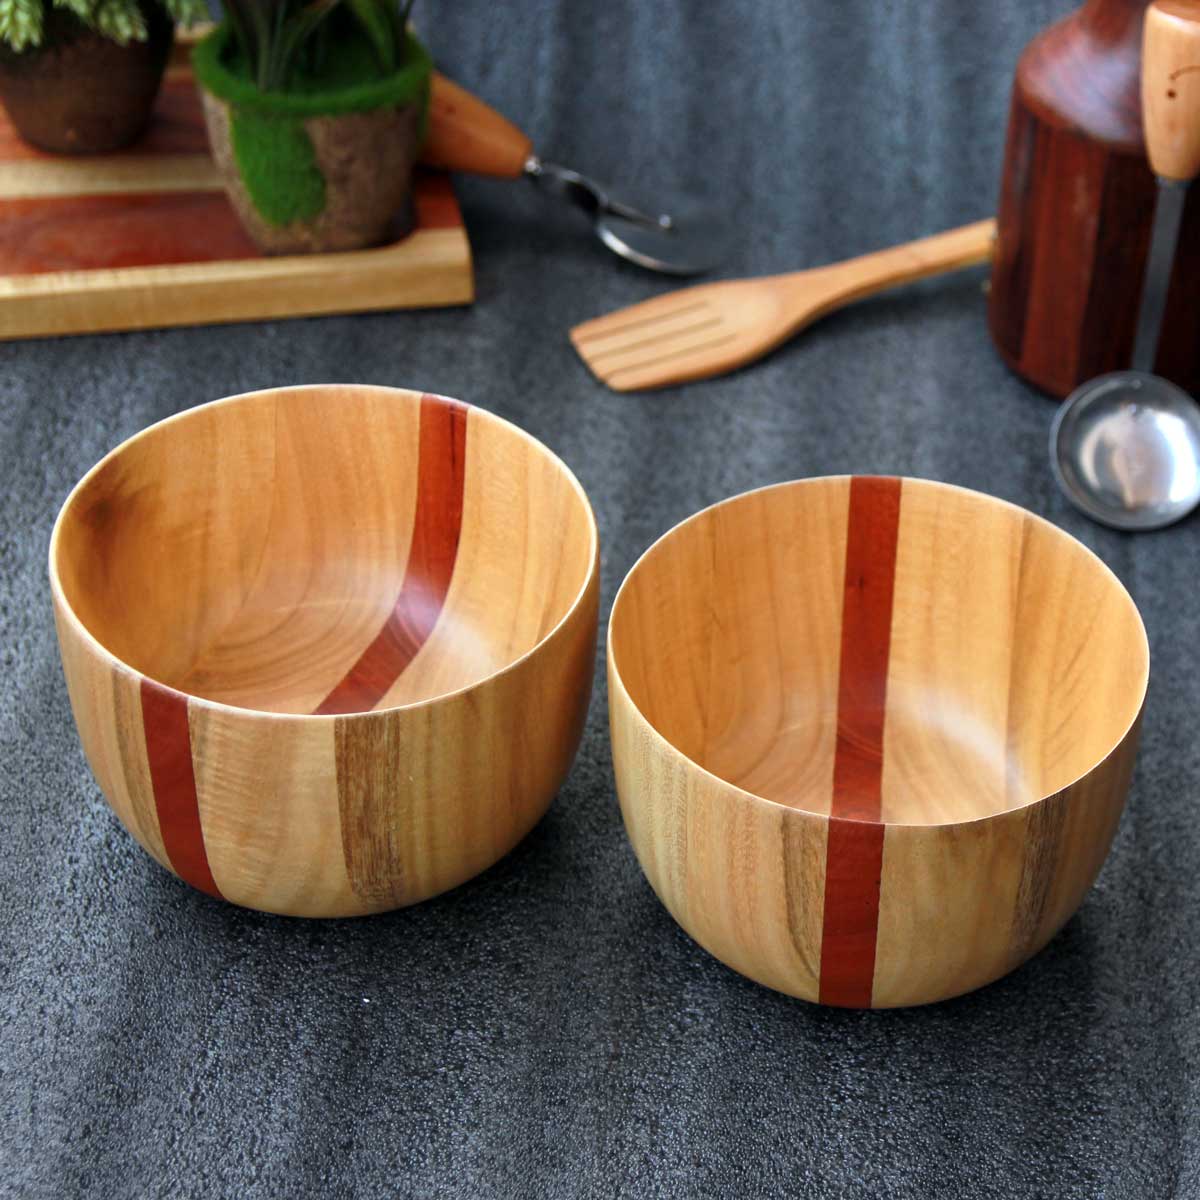 Set 4 Serving Bowls rare Hand crafted New Pottery Bowl Unique Original Gift  art | eBay